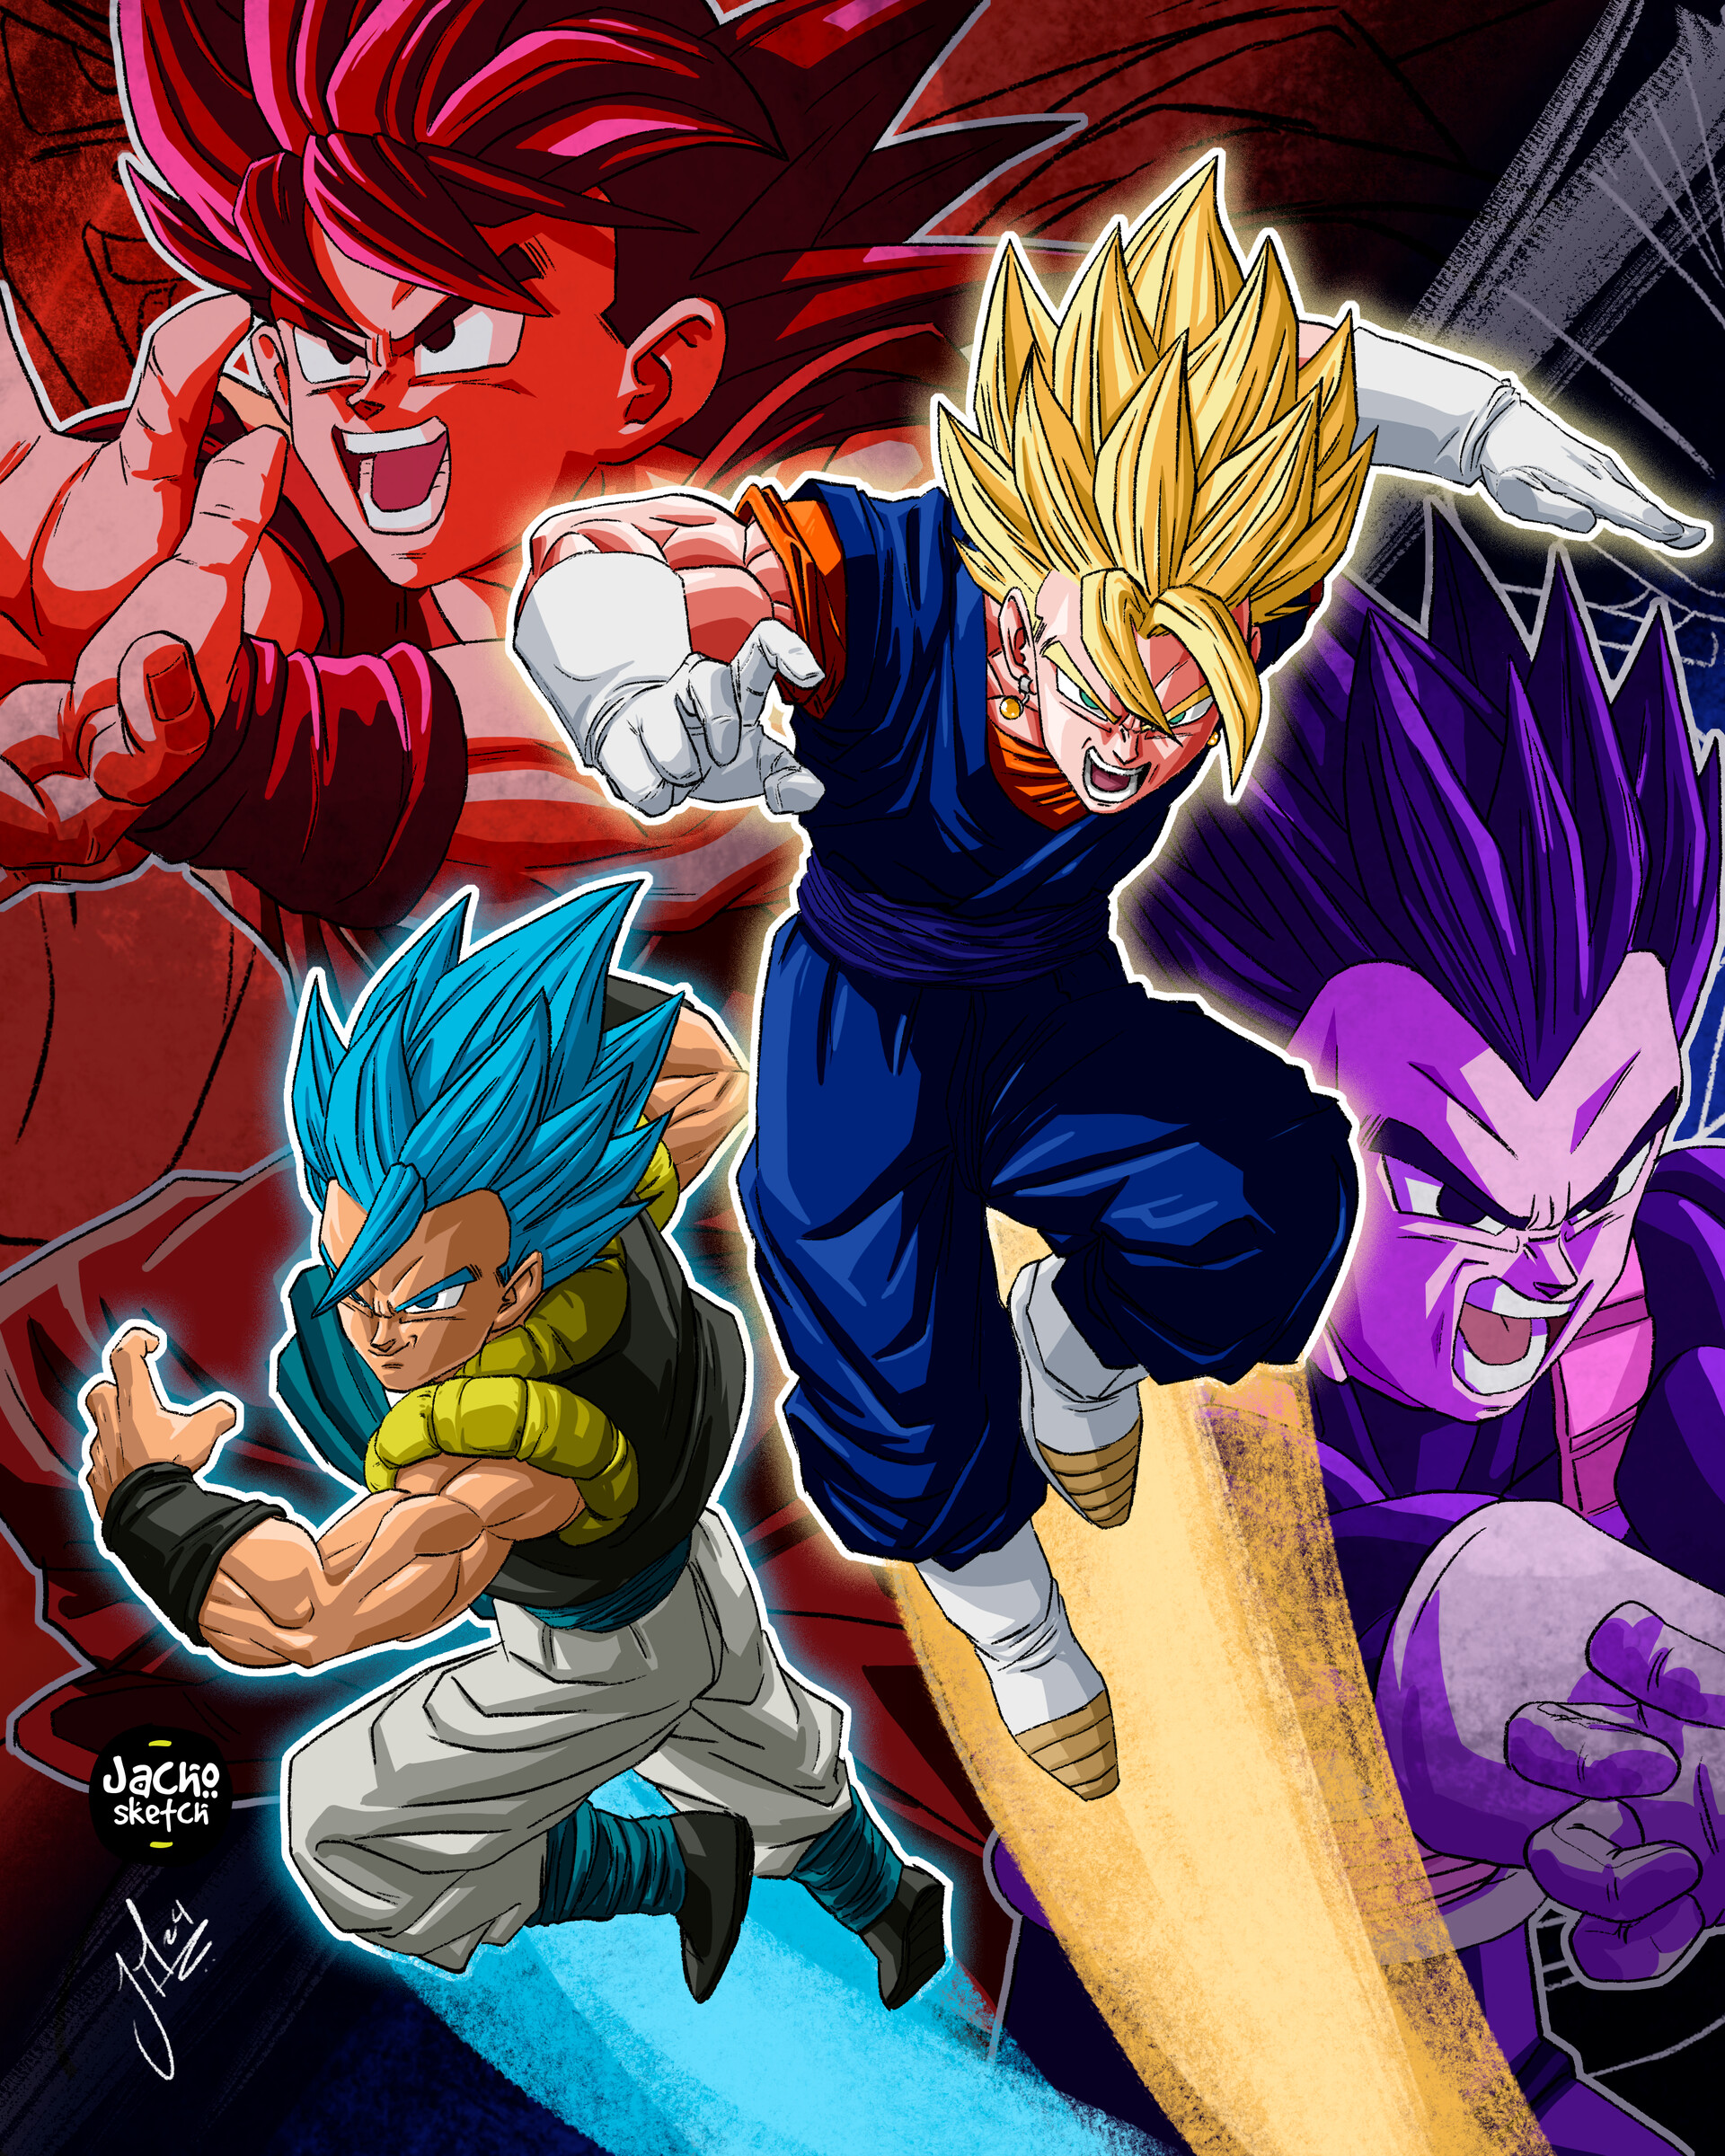 ArtStation - Goku and Vegeta potara fusion